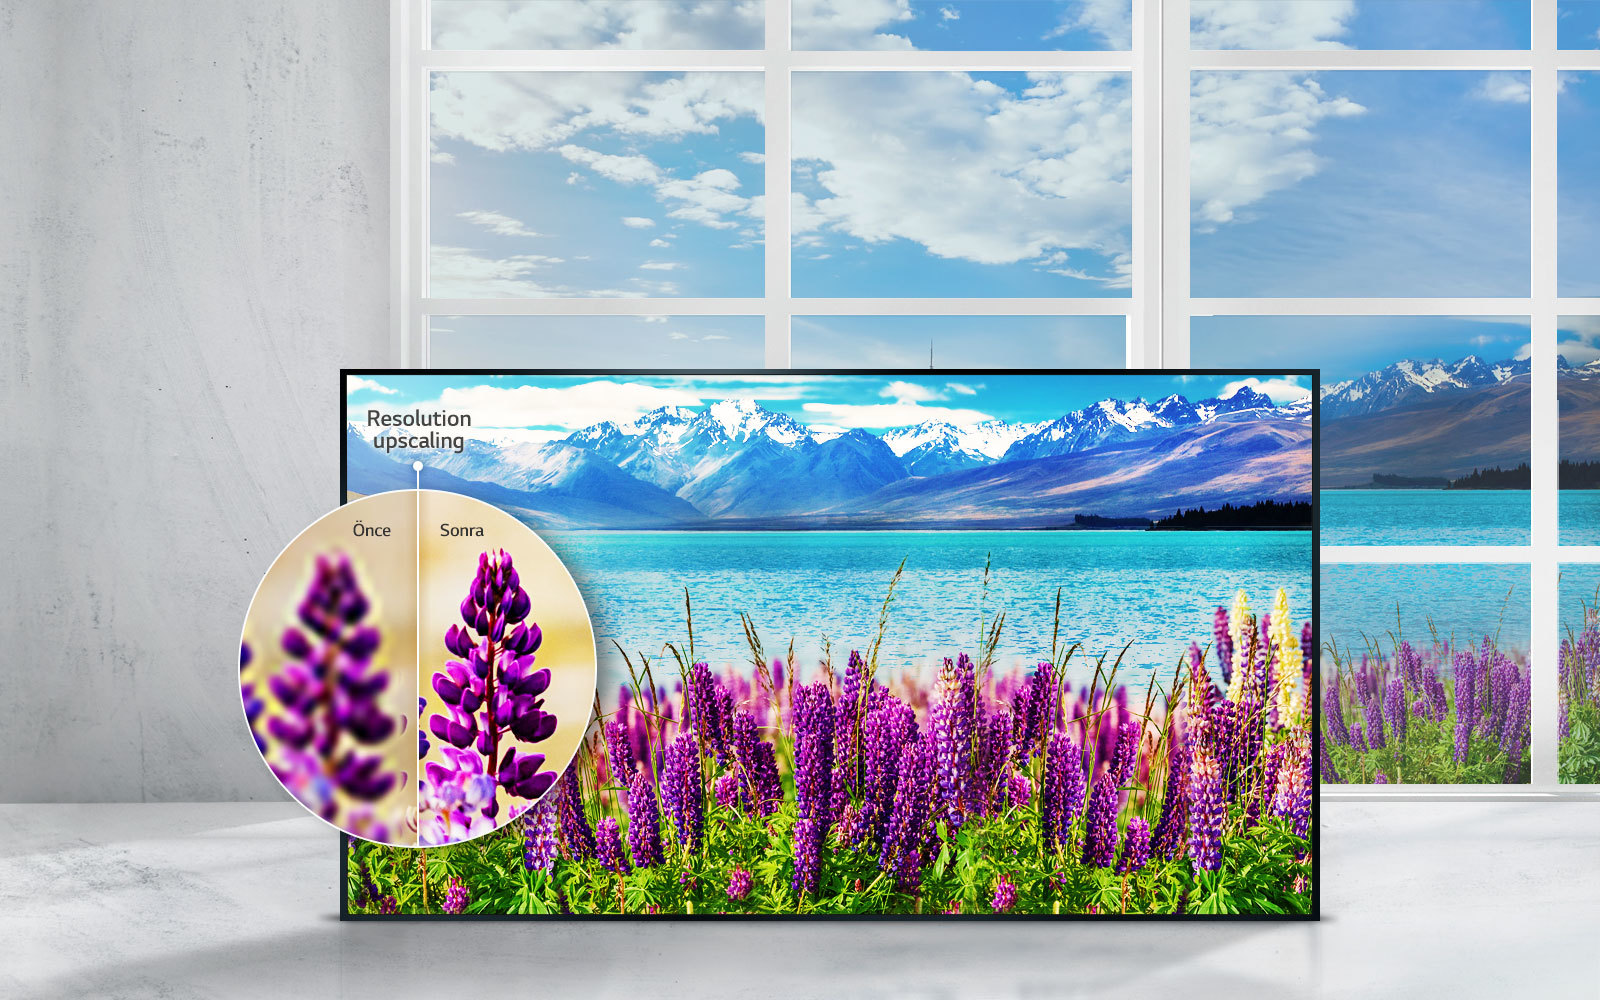 LG 60UJ630V 60″ 152 Ekran Ultra HD 4K Uydu Alıcılı Smart Led Tv